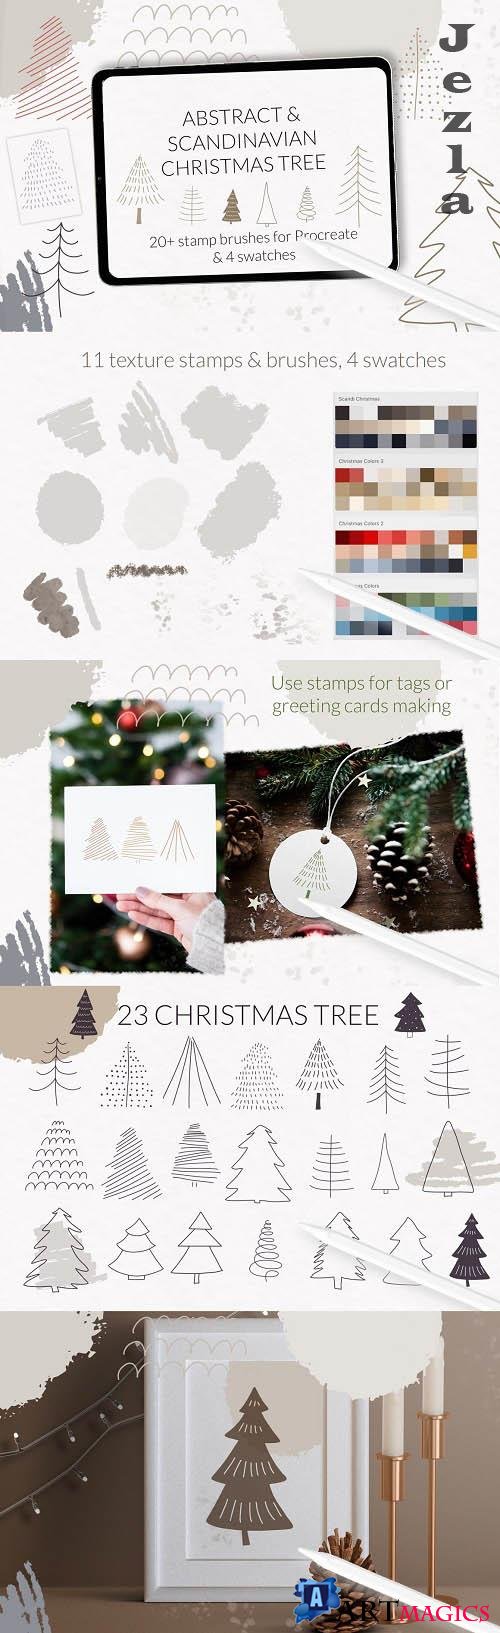 Scandinavian abstract Christmas tree - 6620627